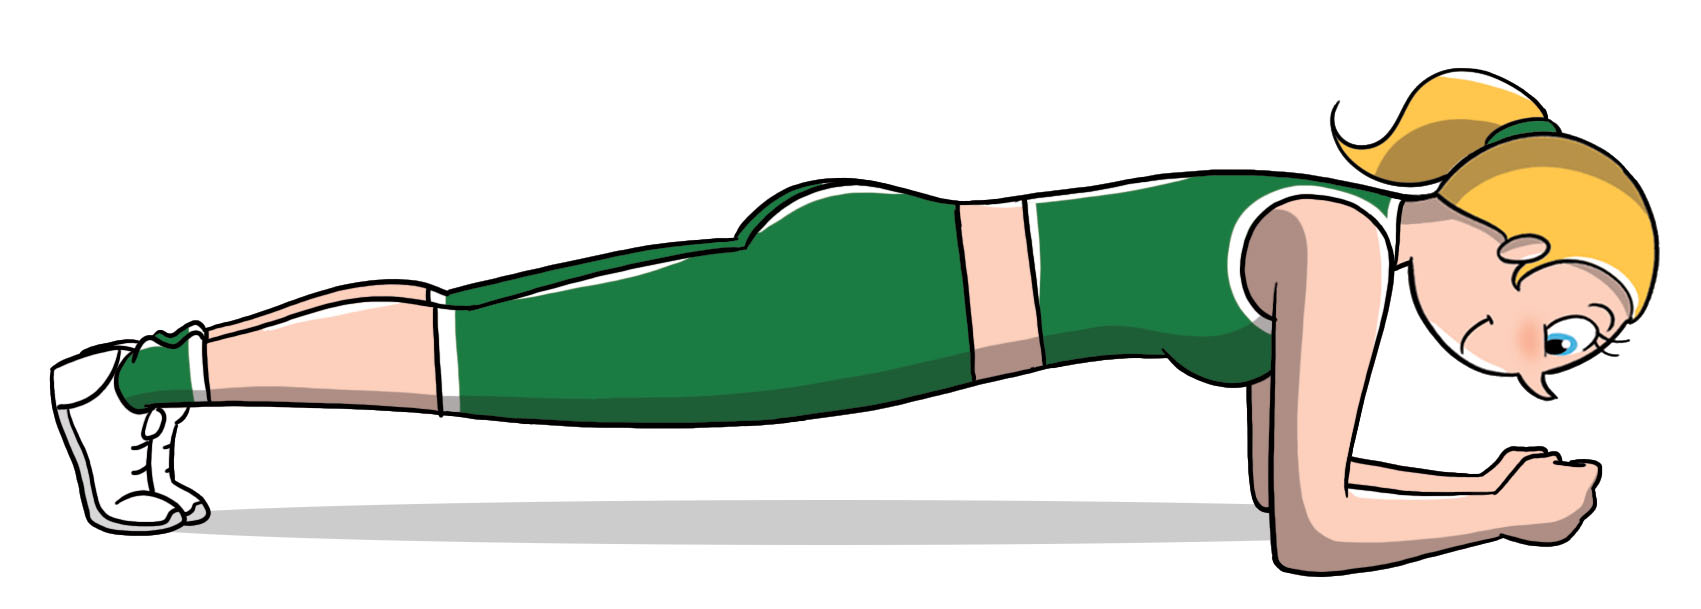 allenamento per lo sci: eseguire plank